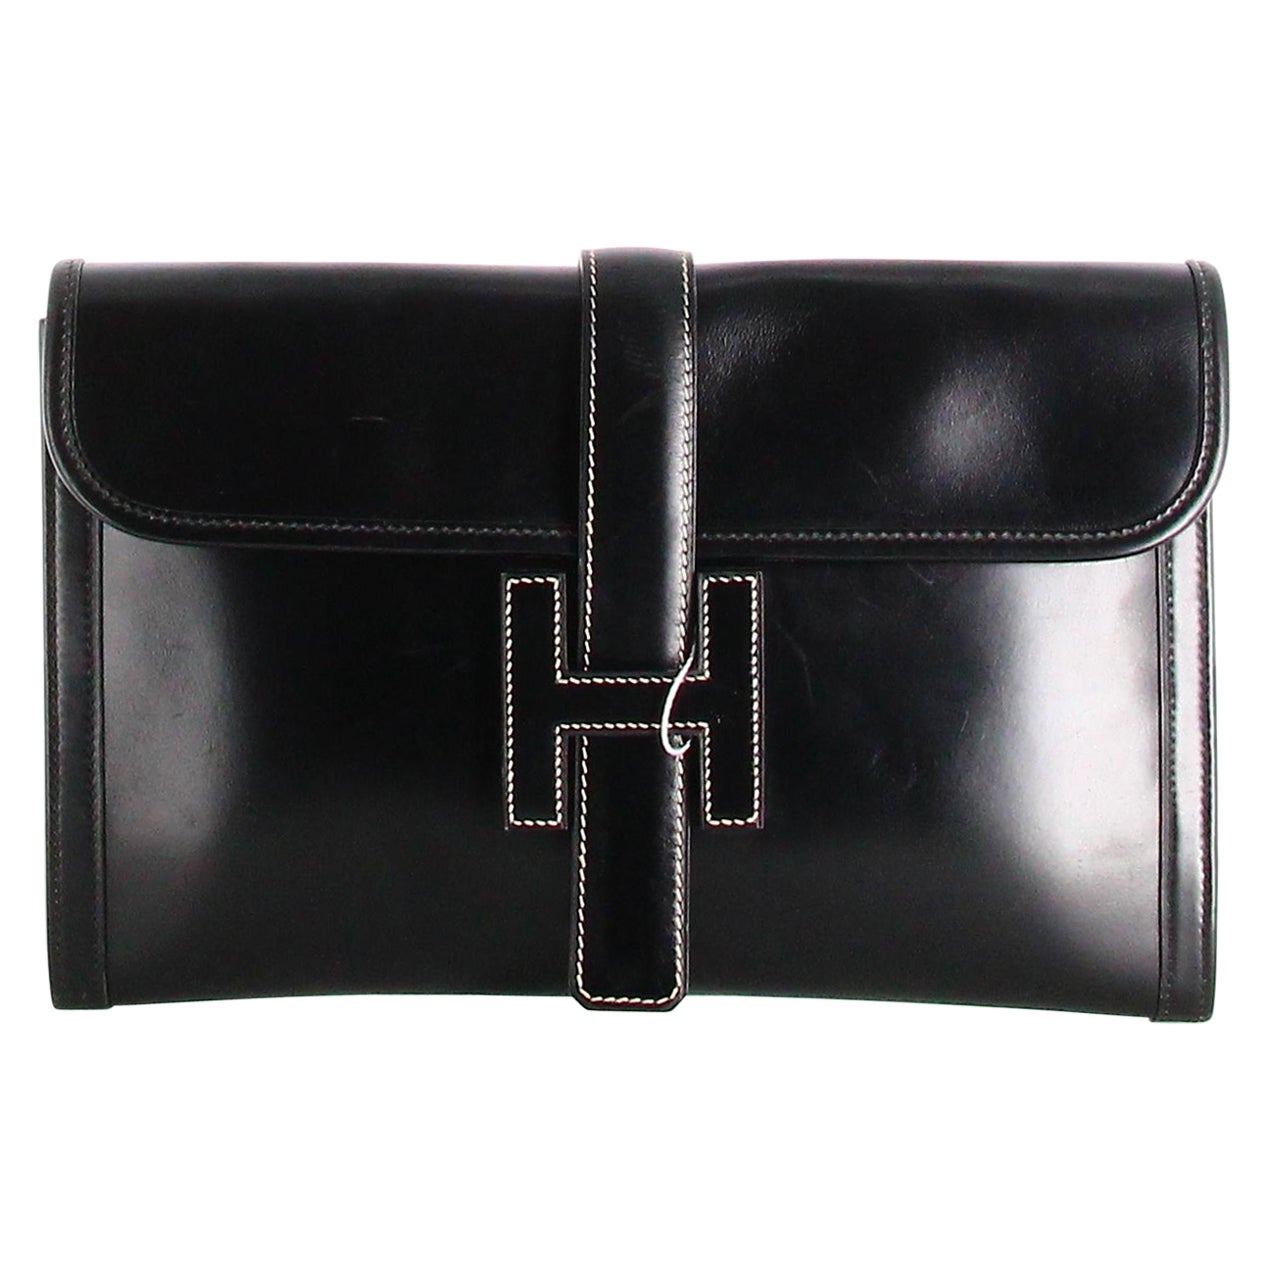 1988 Hermès Jige PM Clutch Bag Black Leather For Sale